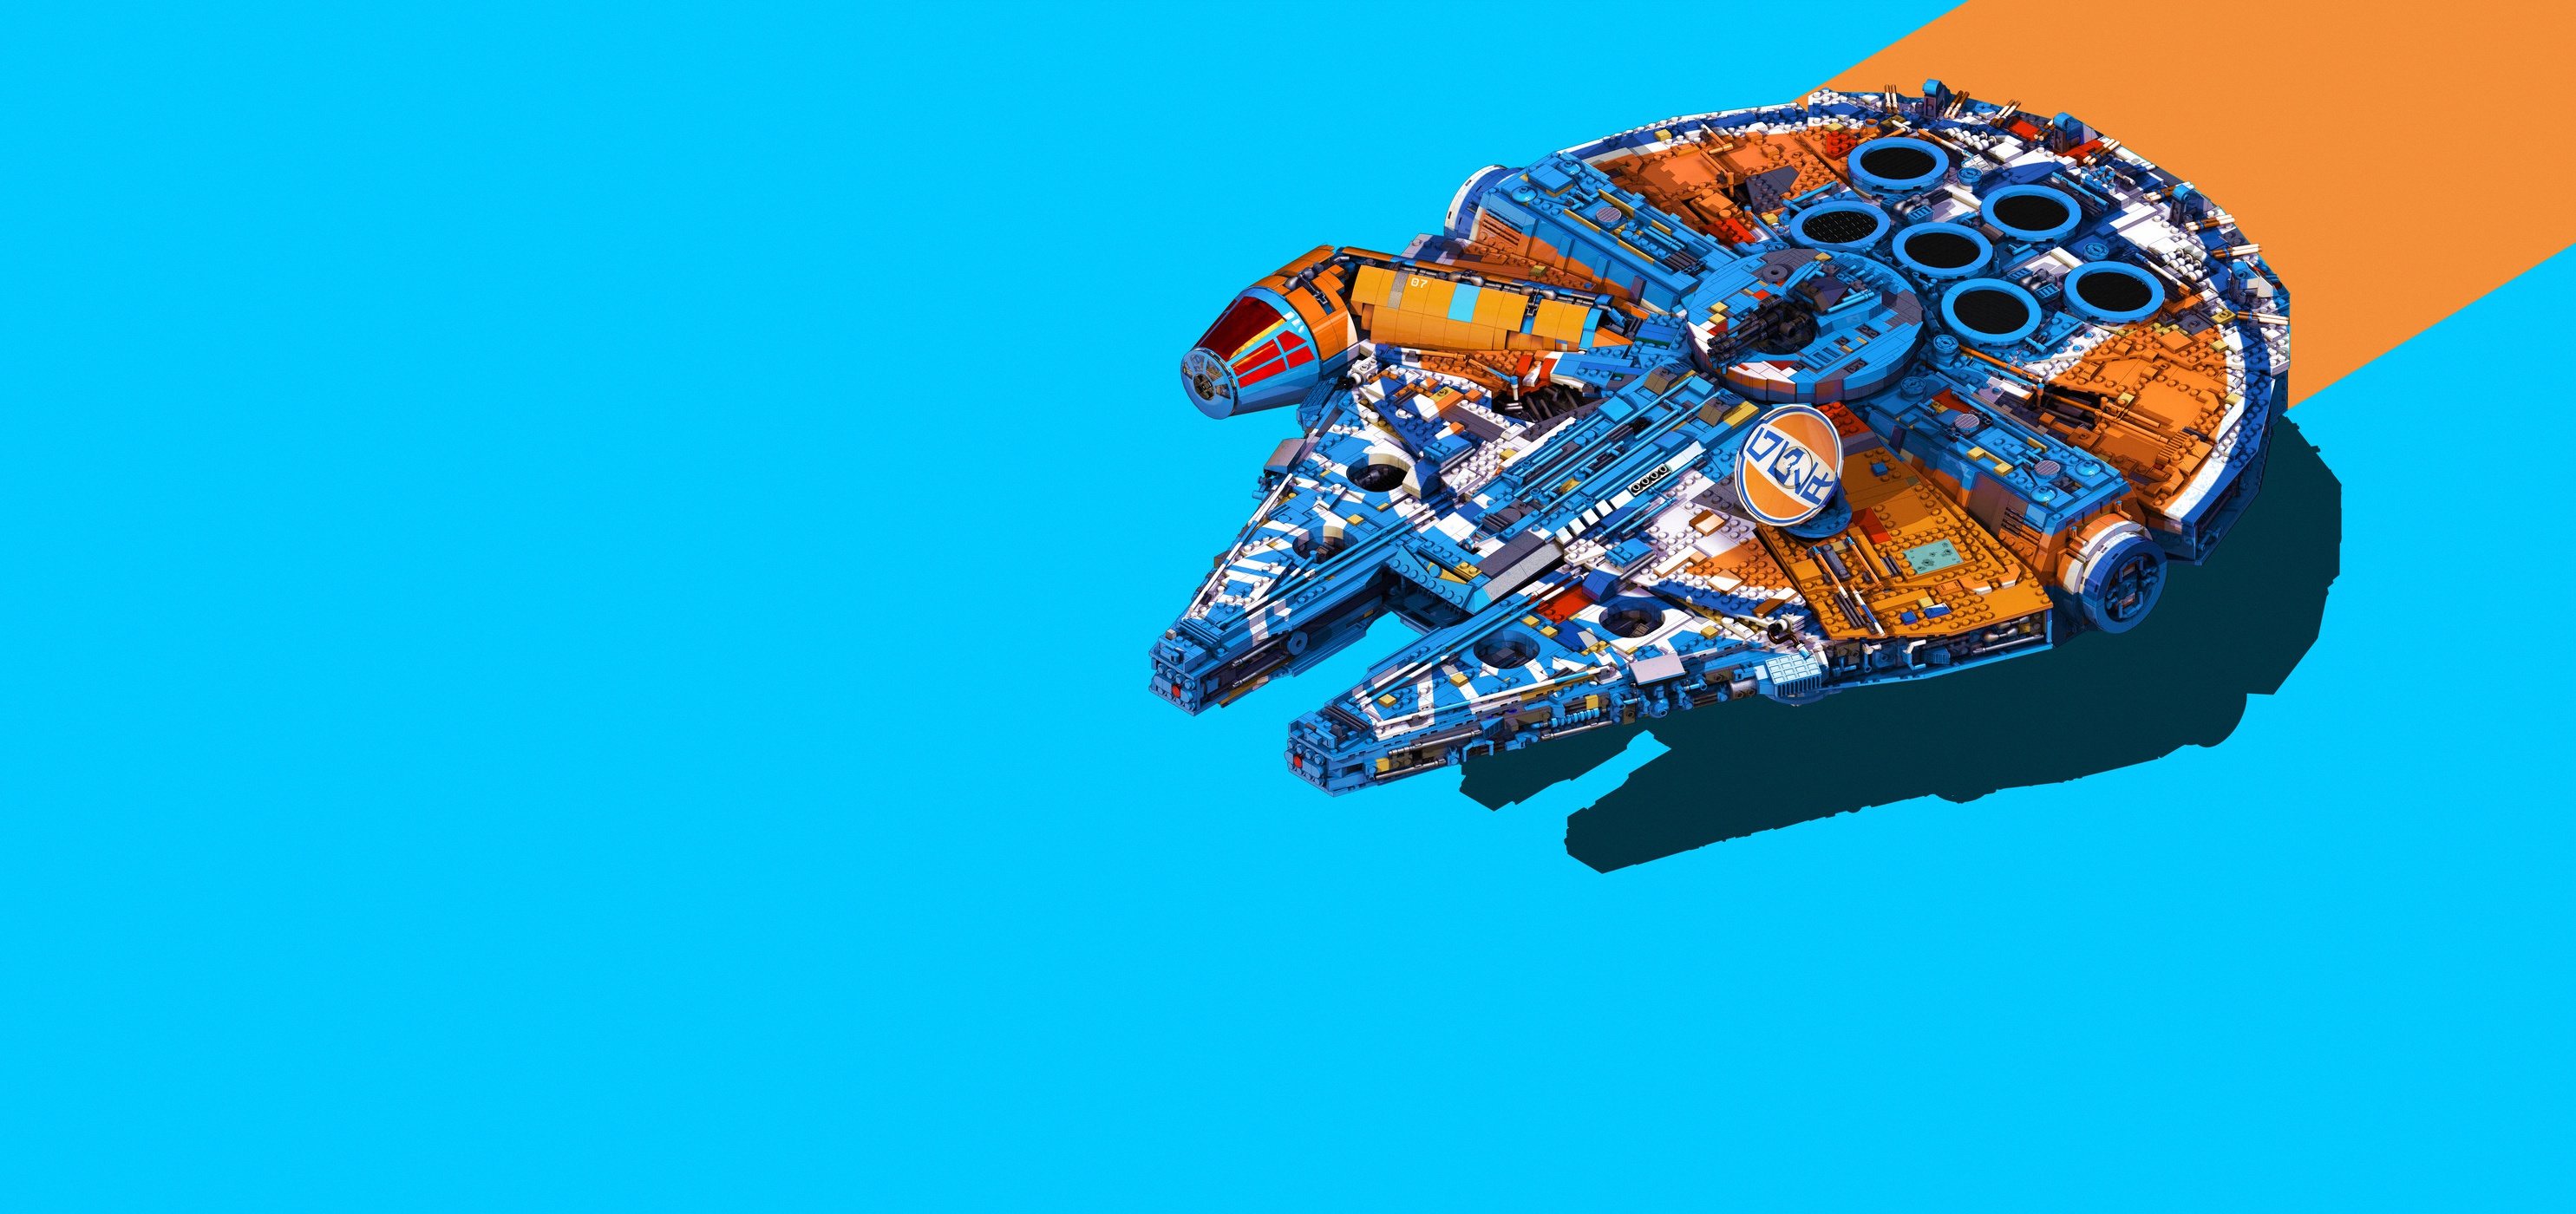 Lego Millennium Falcon Spaceship Star Wars 2970x1400